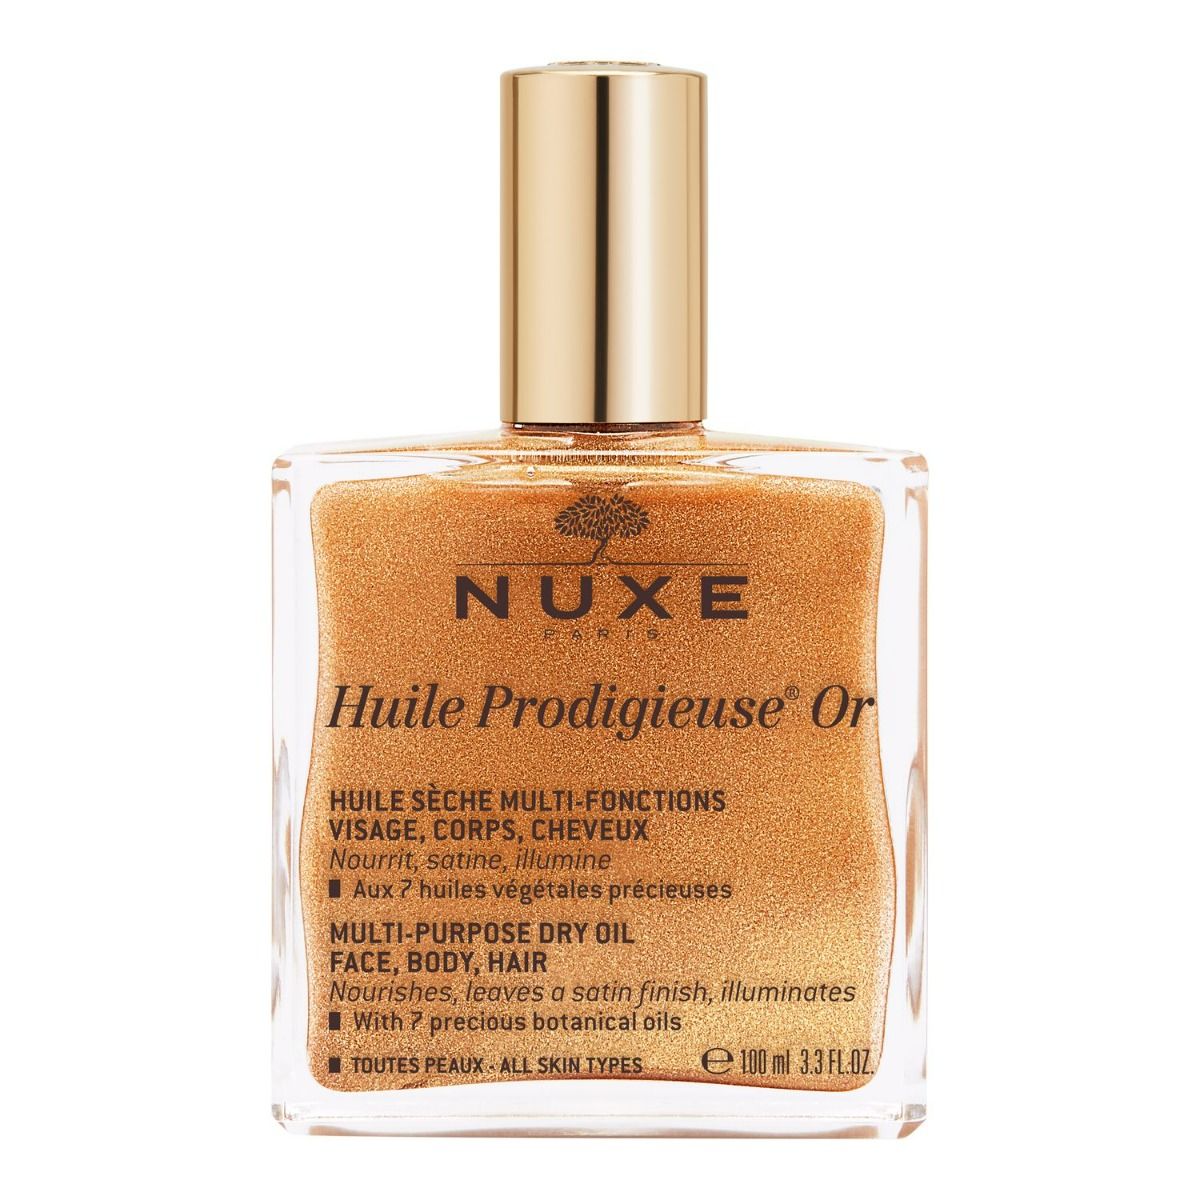 Nuxe Huile Prodigieuse Or масло для лица, тела и волос, 100 ml gernetic huile de beuate beauty oil масло для лица и тела масло красоты 500 мл